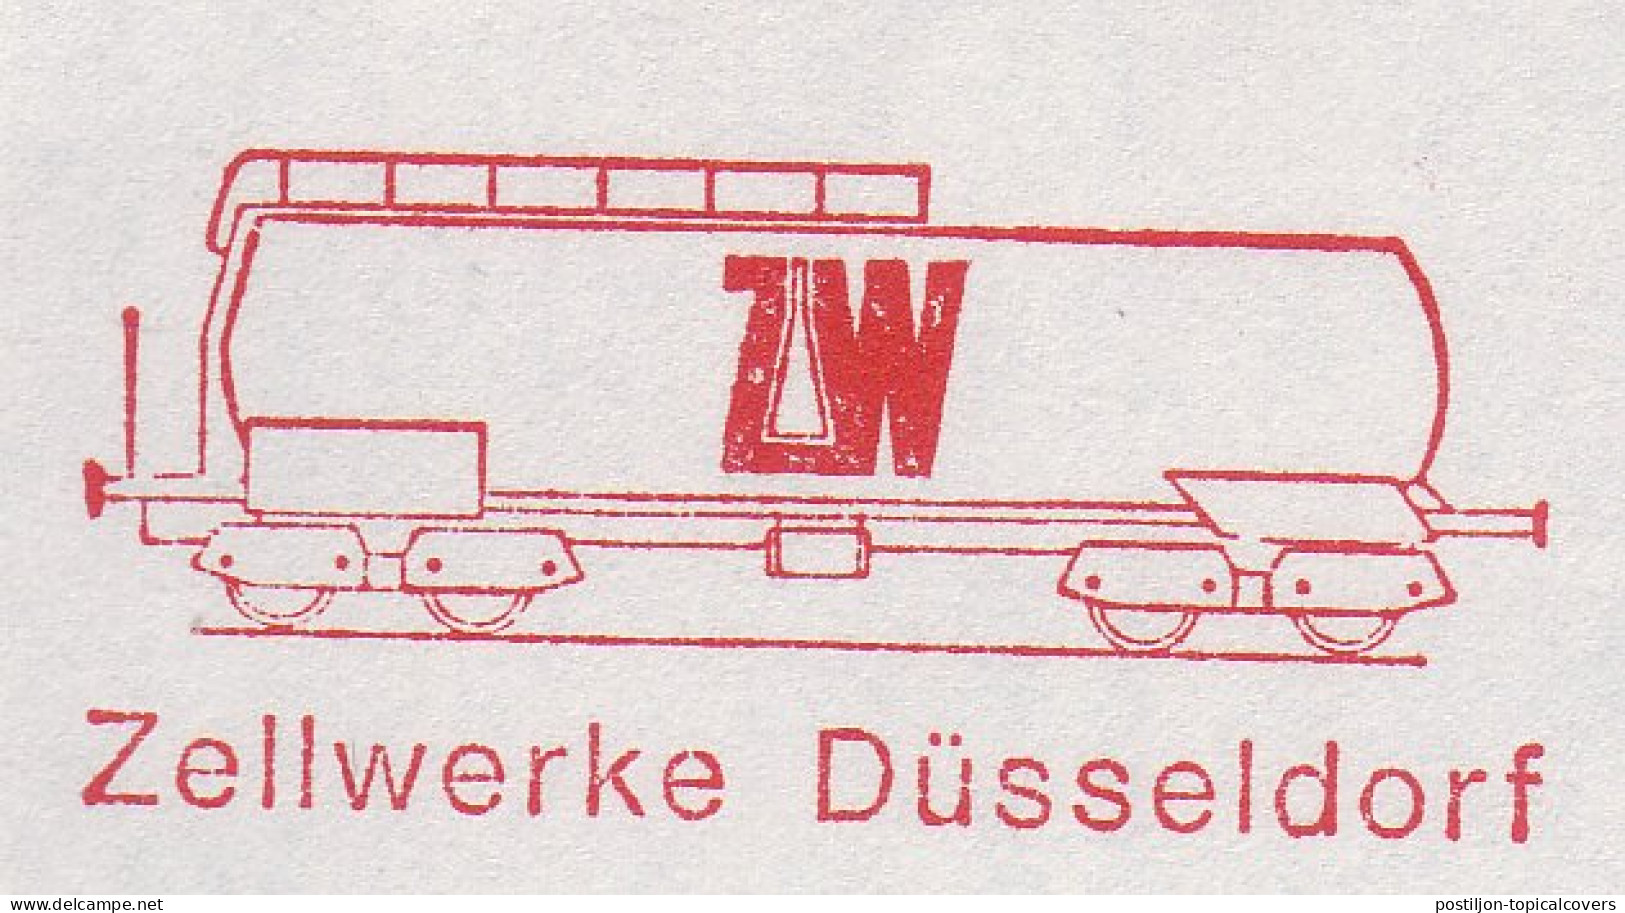 Meter Cut Germany 1998 Train Wagon - Trains